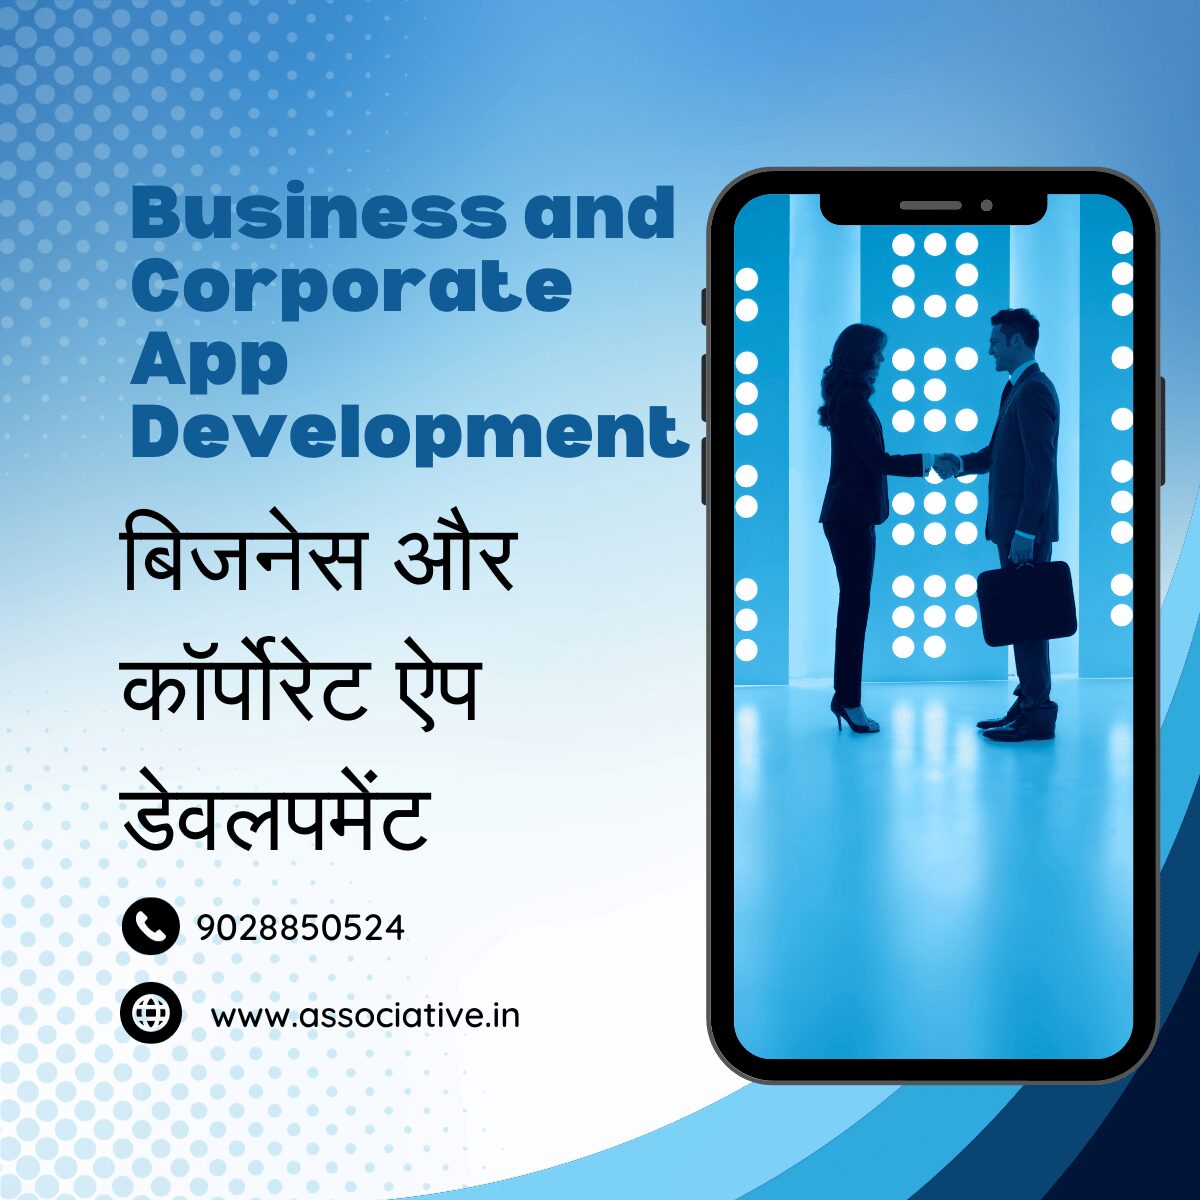 Business and Corporate App Development बिजनेस और कॉर्पोरेट ऐप डेवलपमेंट